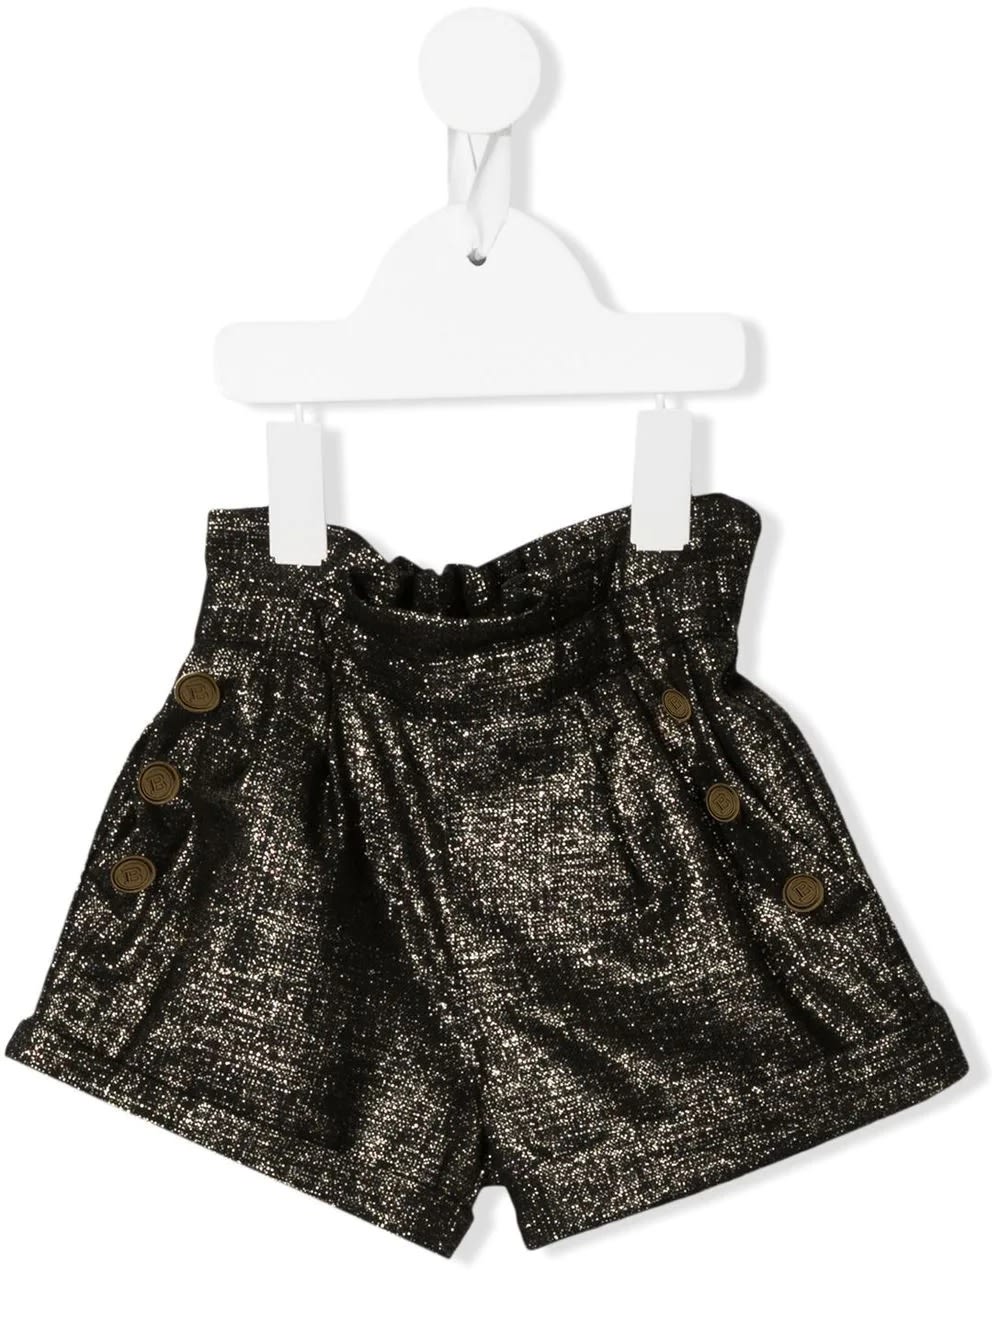 Balmain Baby Shorts In Black And Gold Lurex Wool Blend